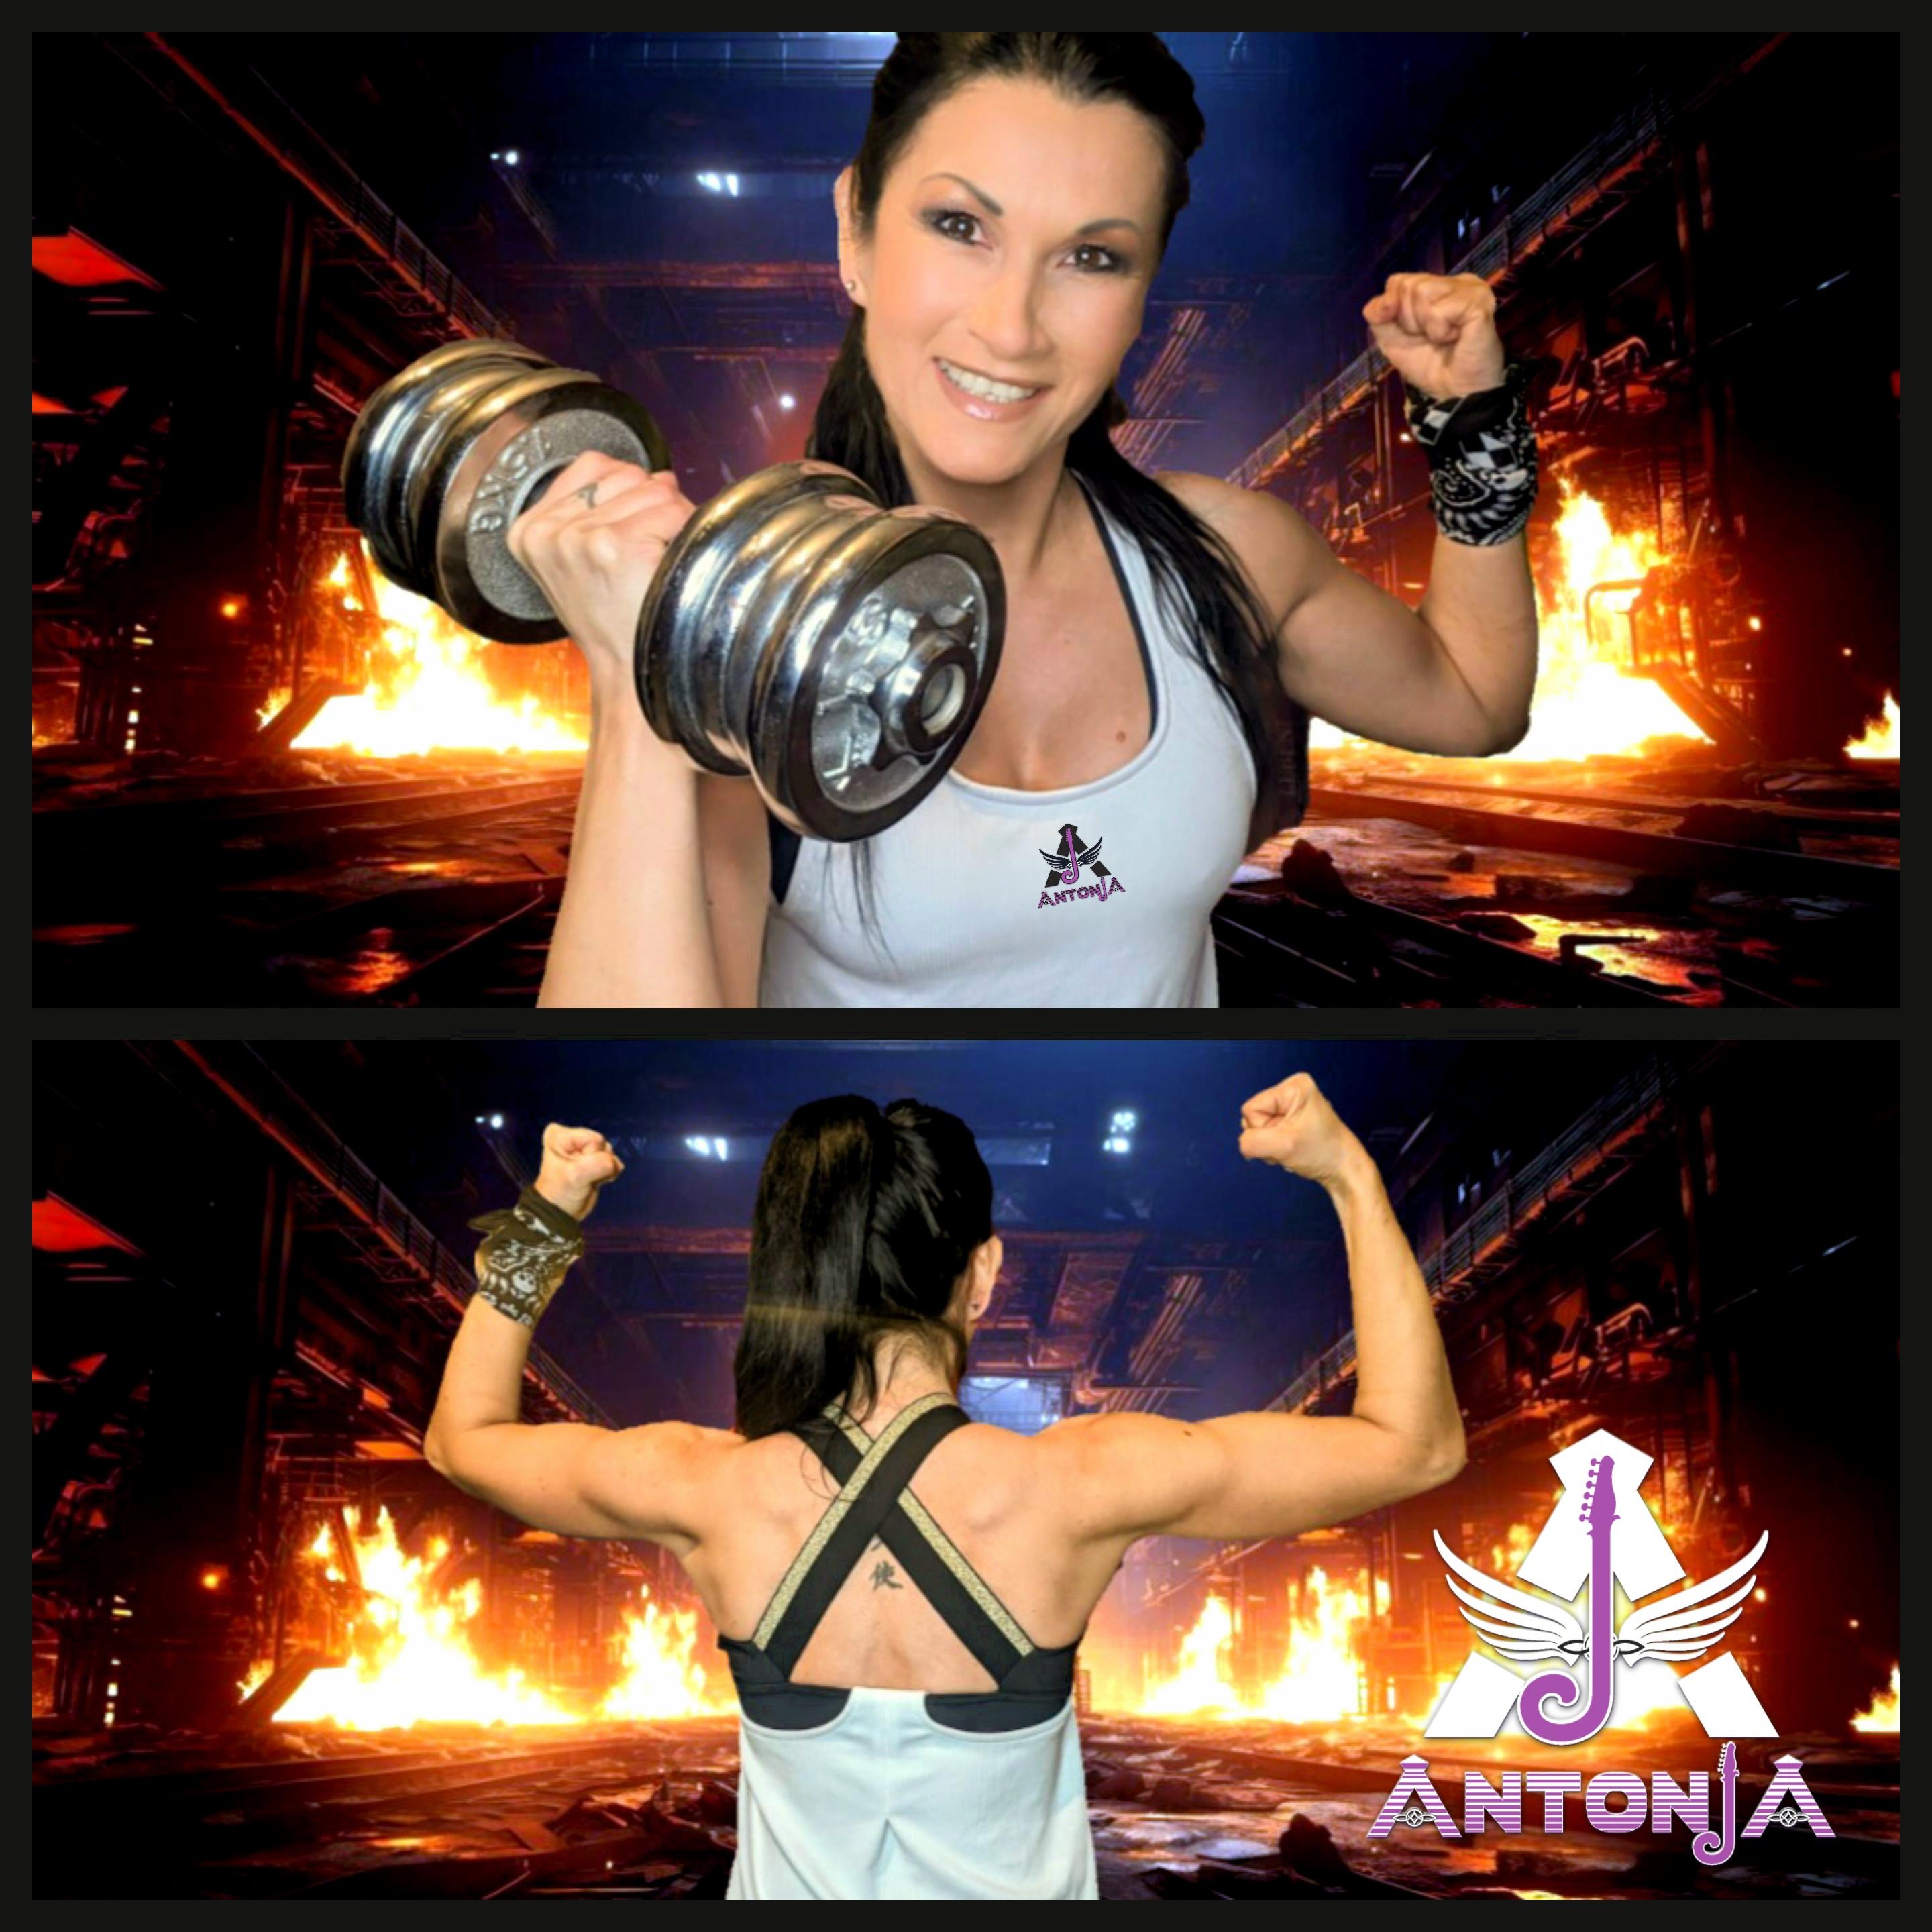 Antonja during the sports & fitness program